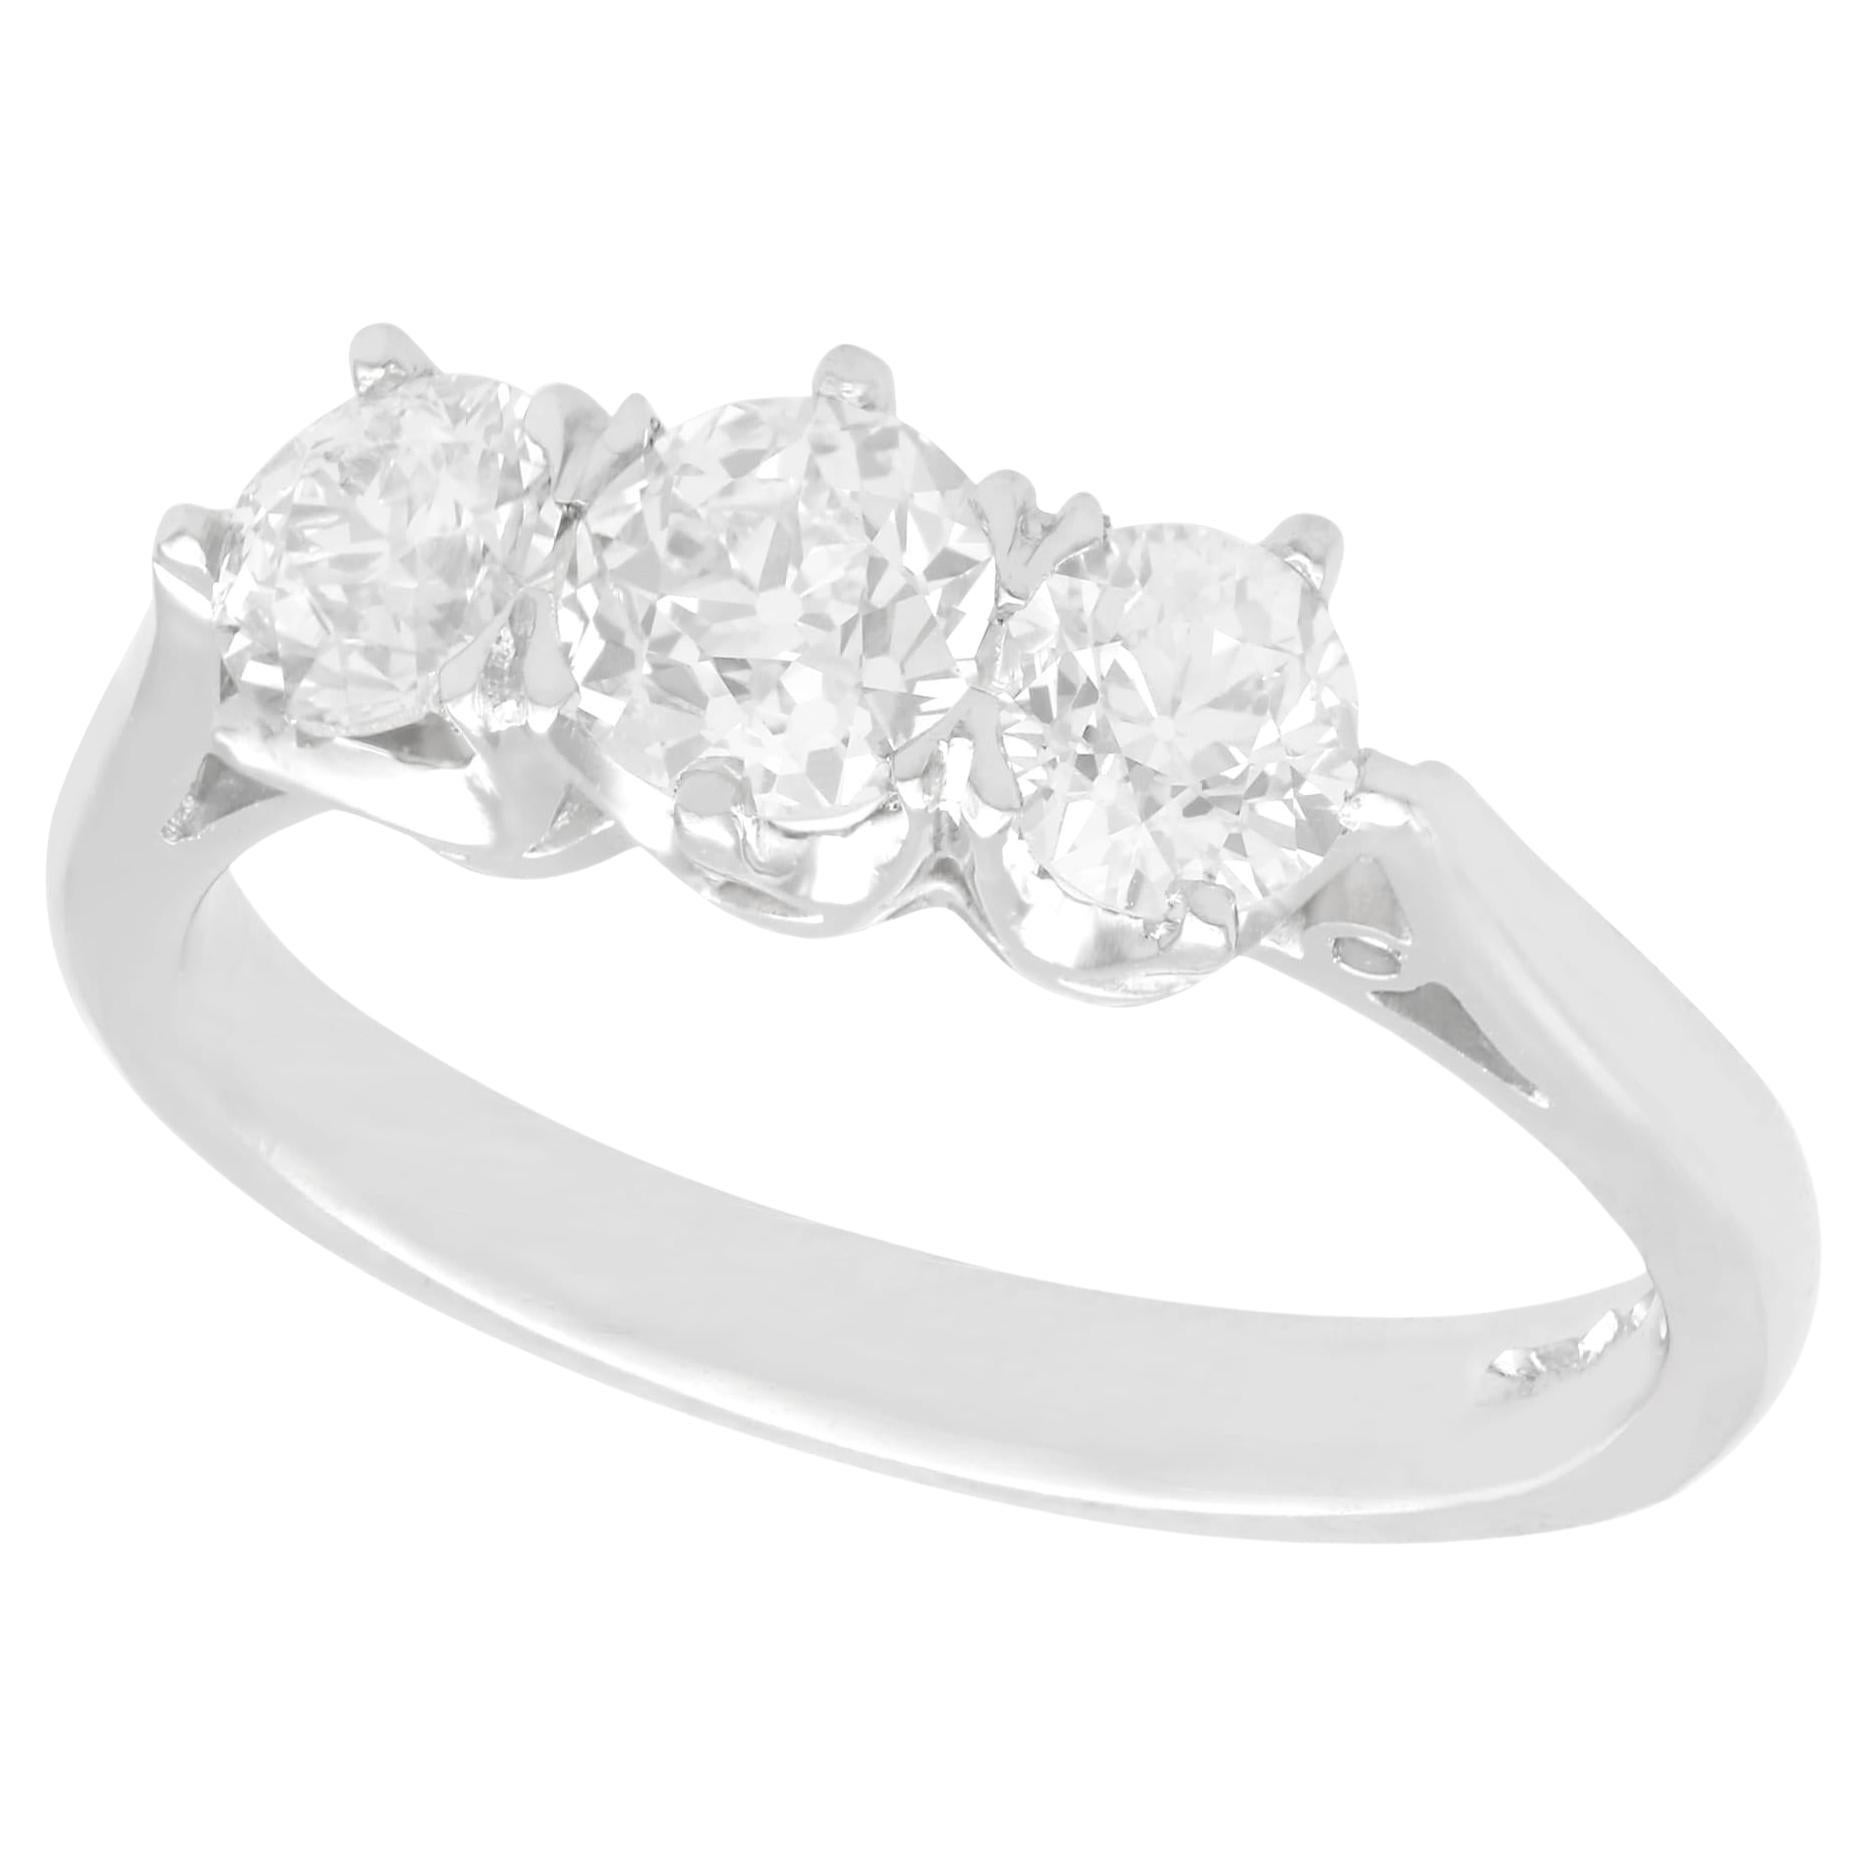 1.45 Carat Diamond and Platinum Trilogy Engagement Ring